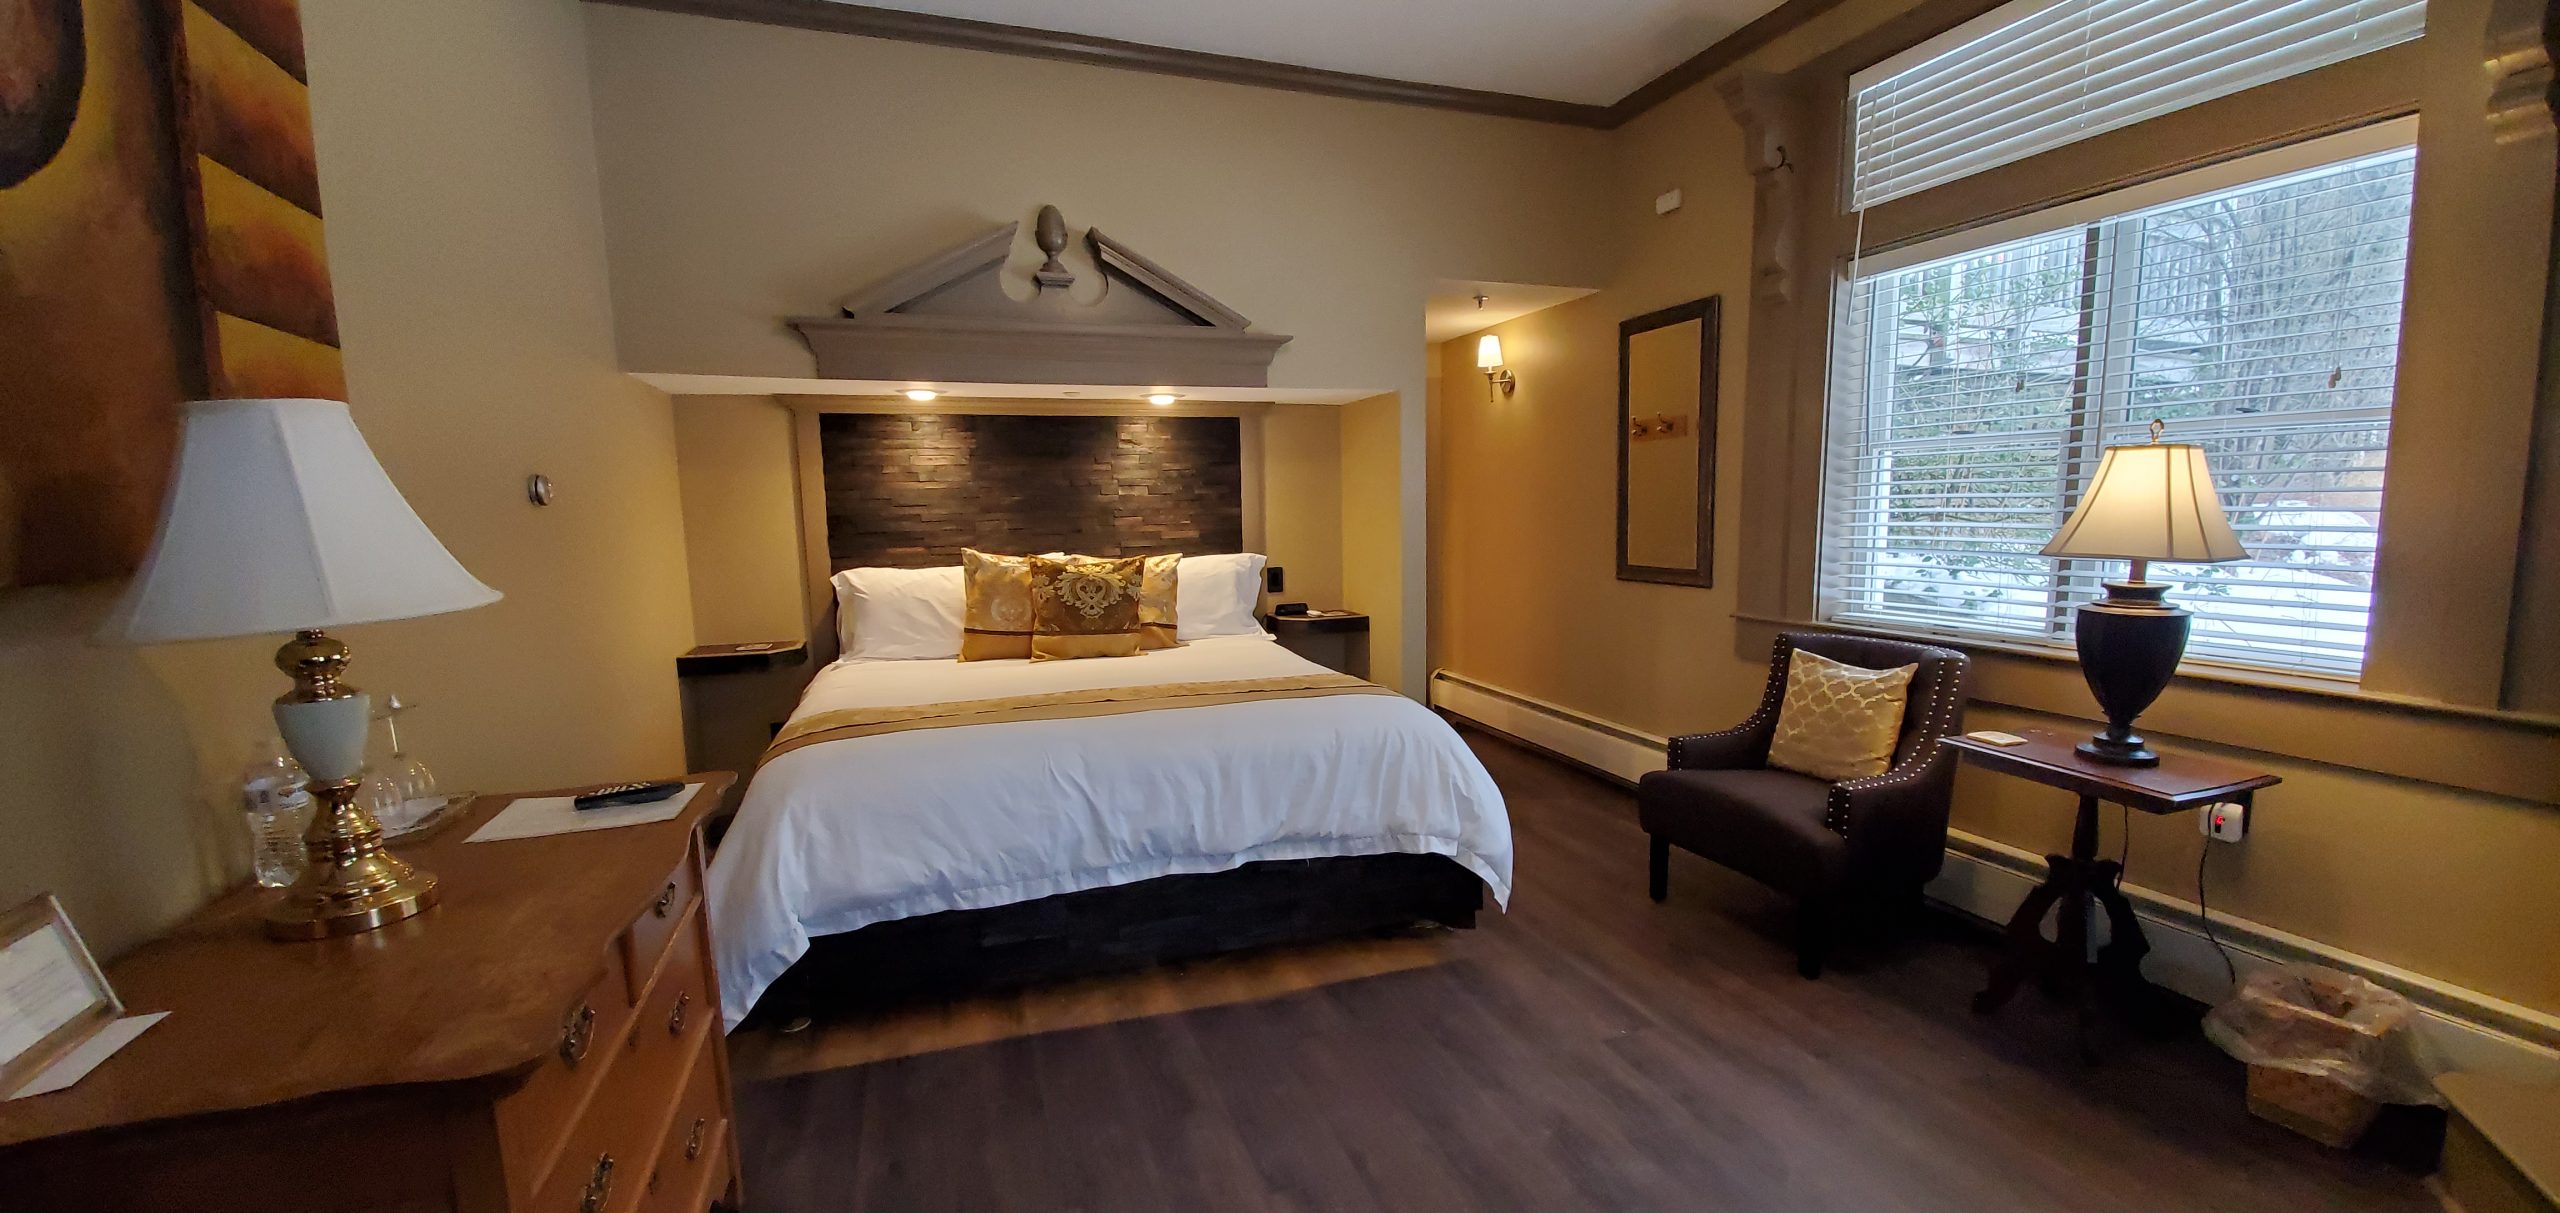 Bedroom and interior in blackberry inn